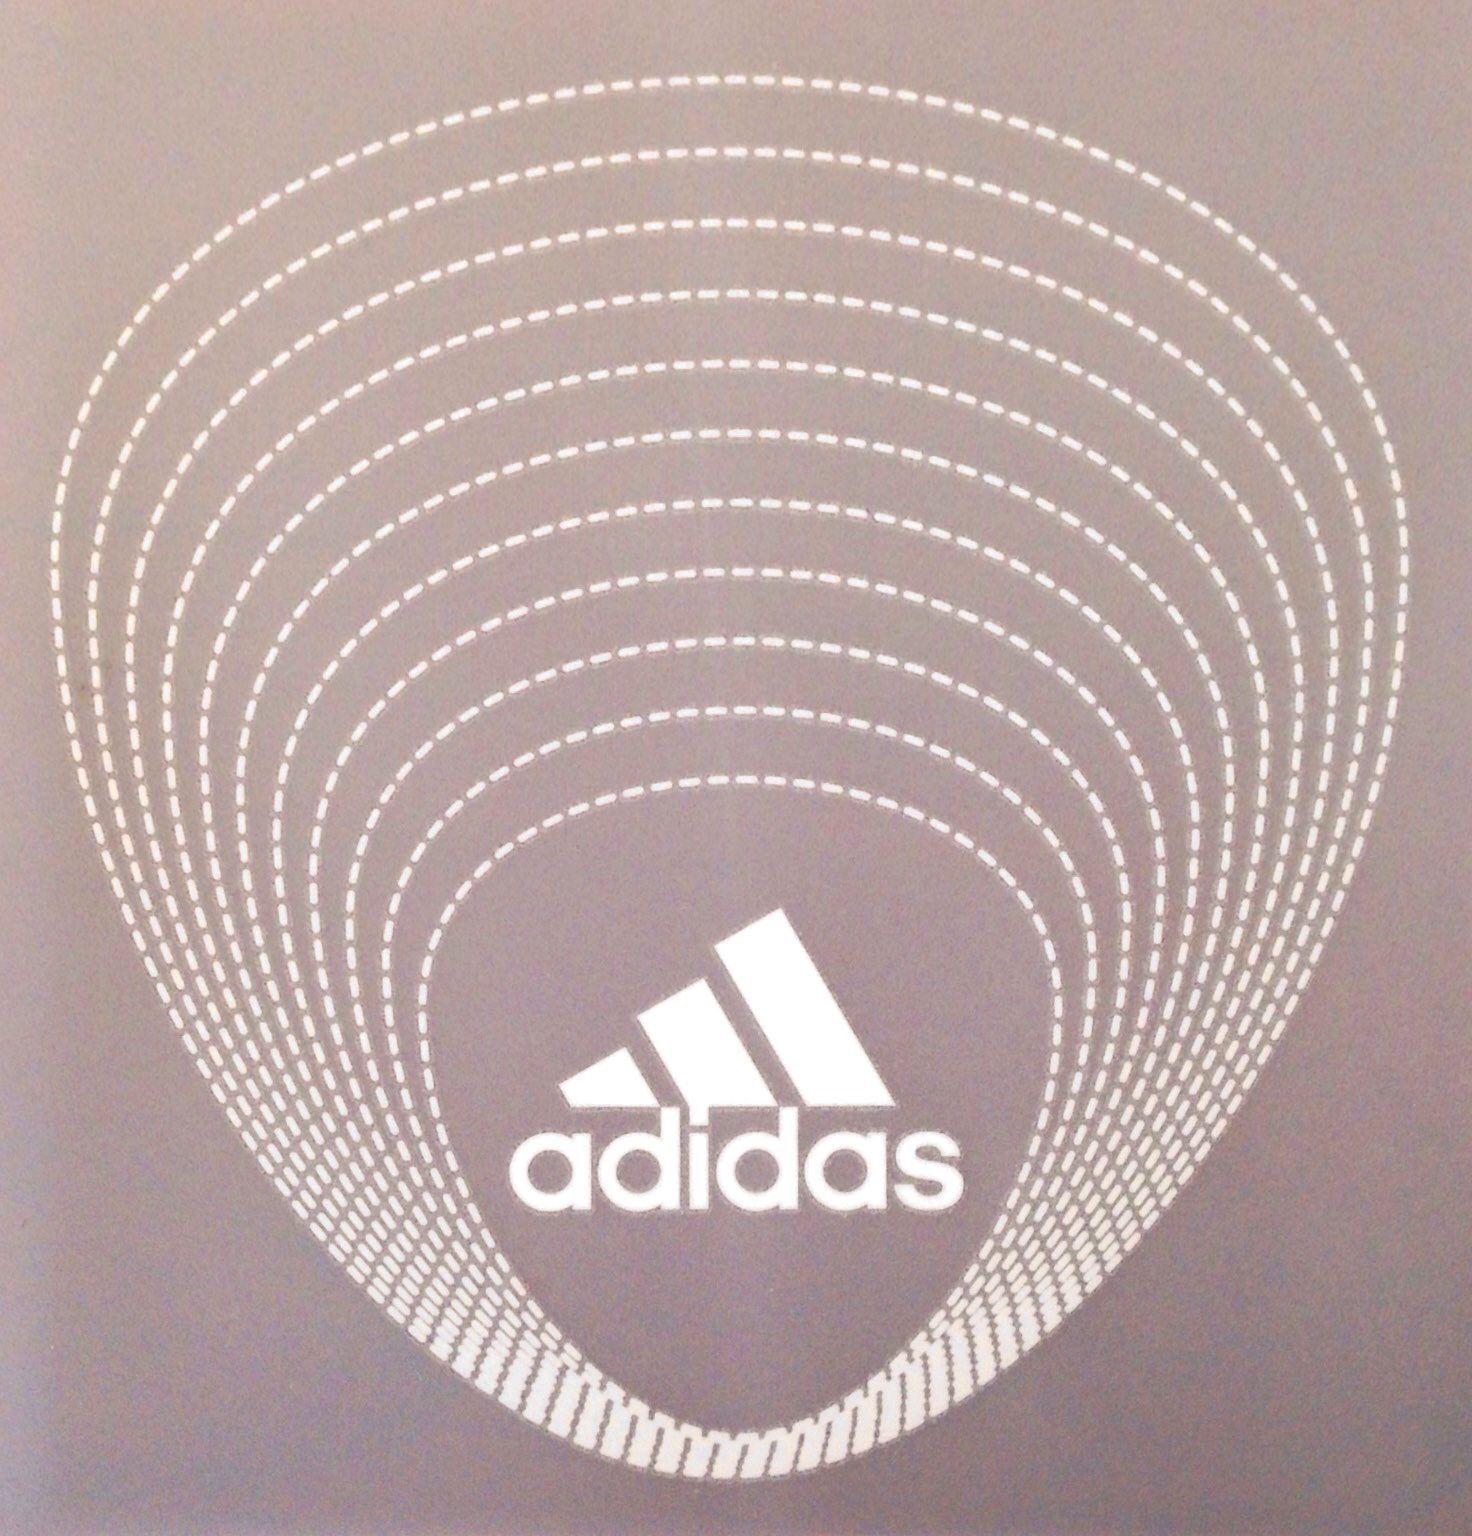 Adidas Soccer Logo - 2010-14 International Football Friendly ADIDAS JUBILANI Official ...